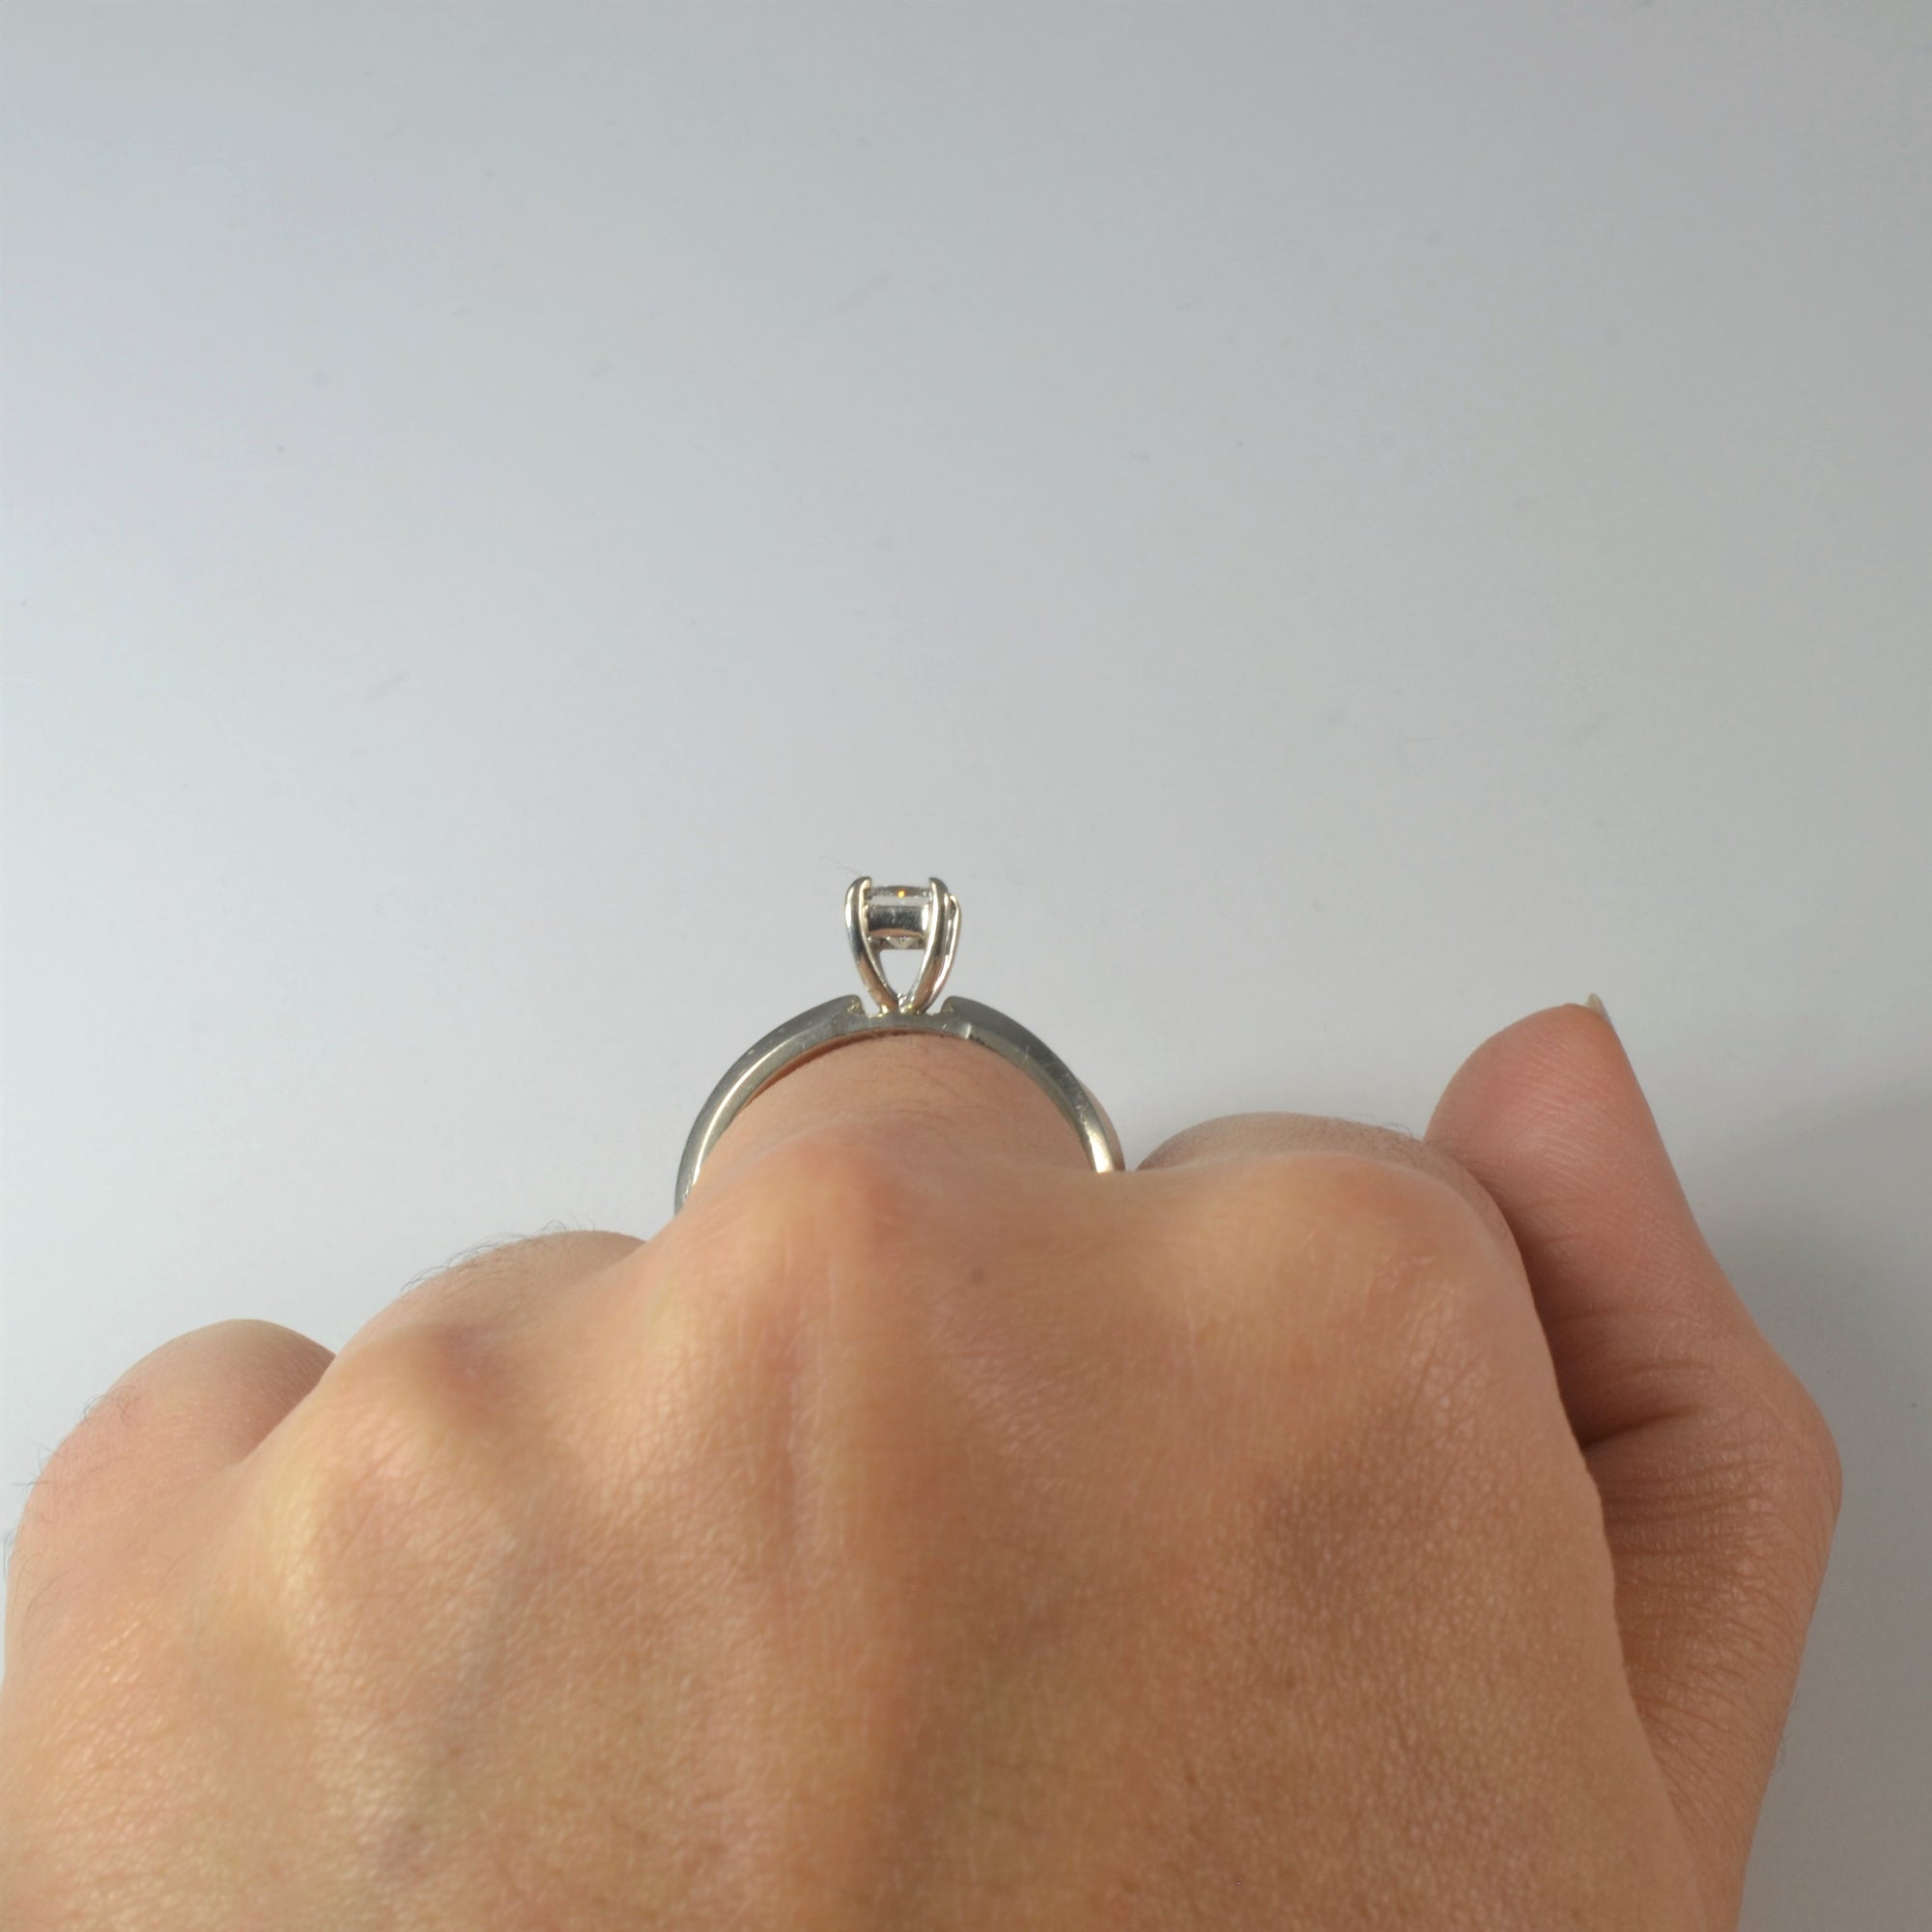 Princess Diamond Engagement Ring | 0.40ct | SZ 6.5 |